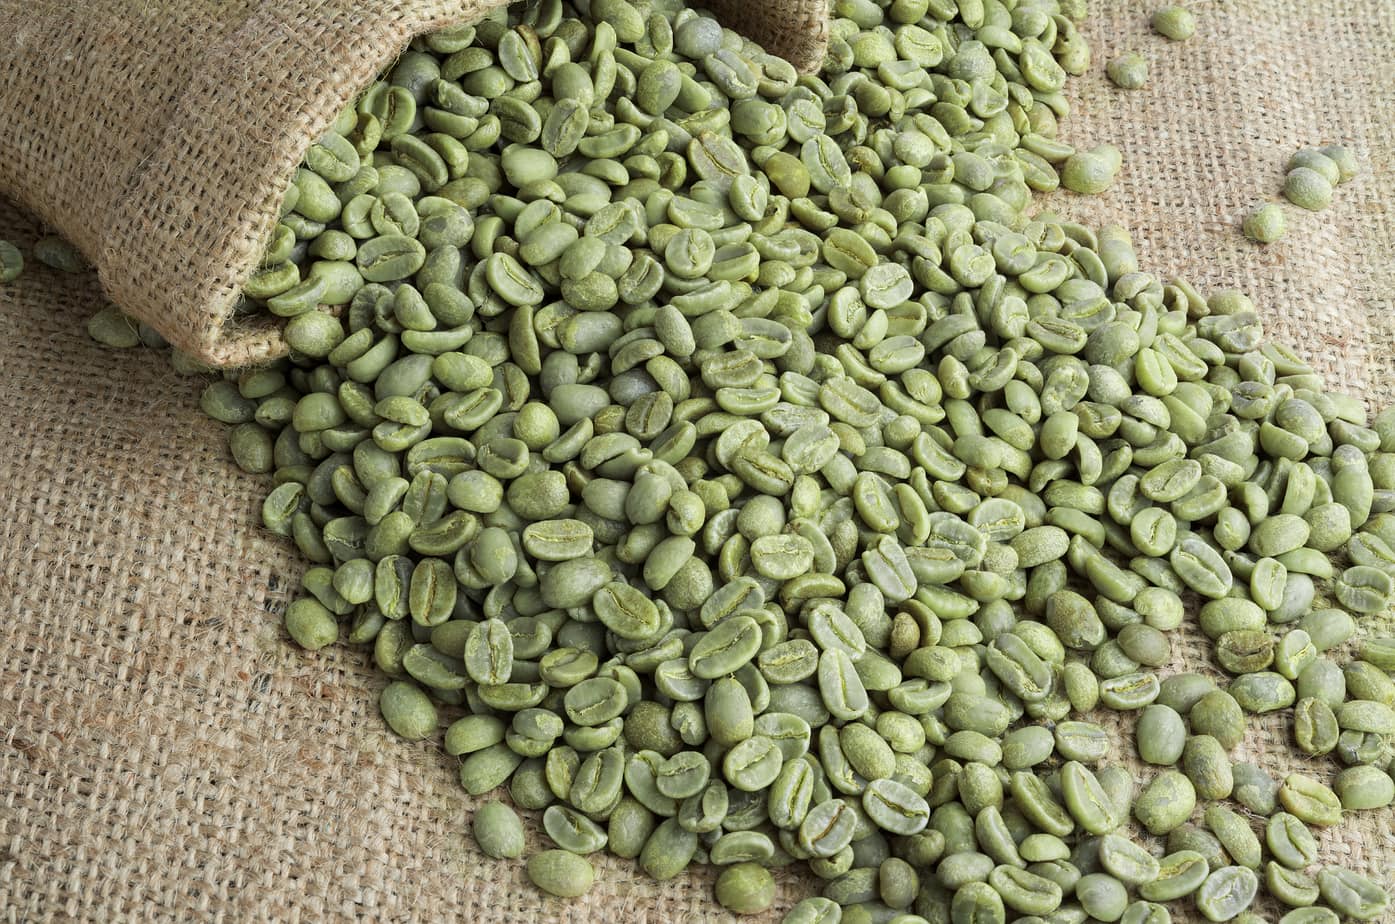 How To Make Green Coffee